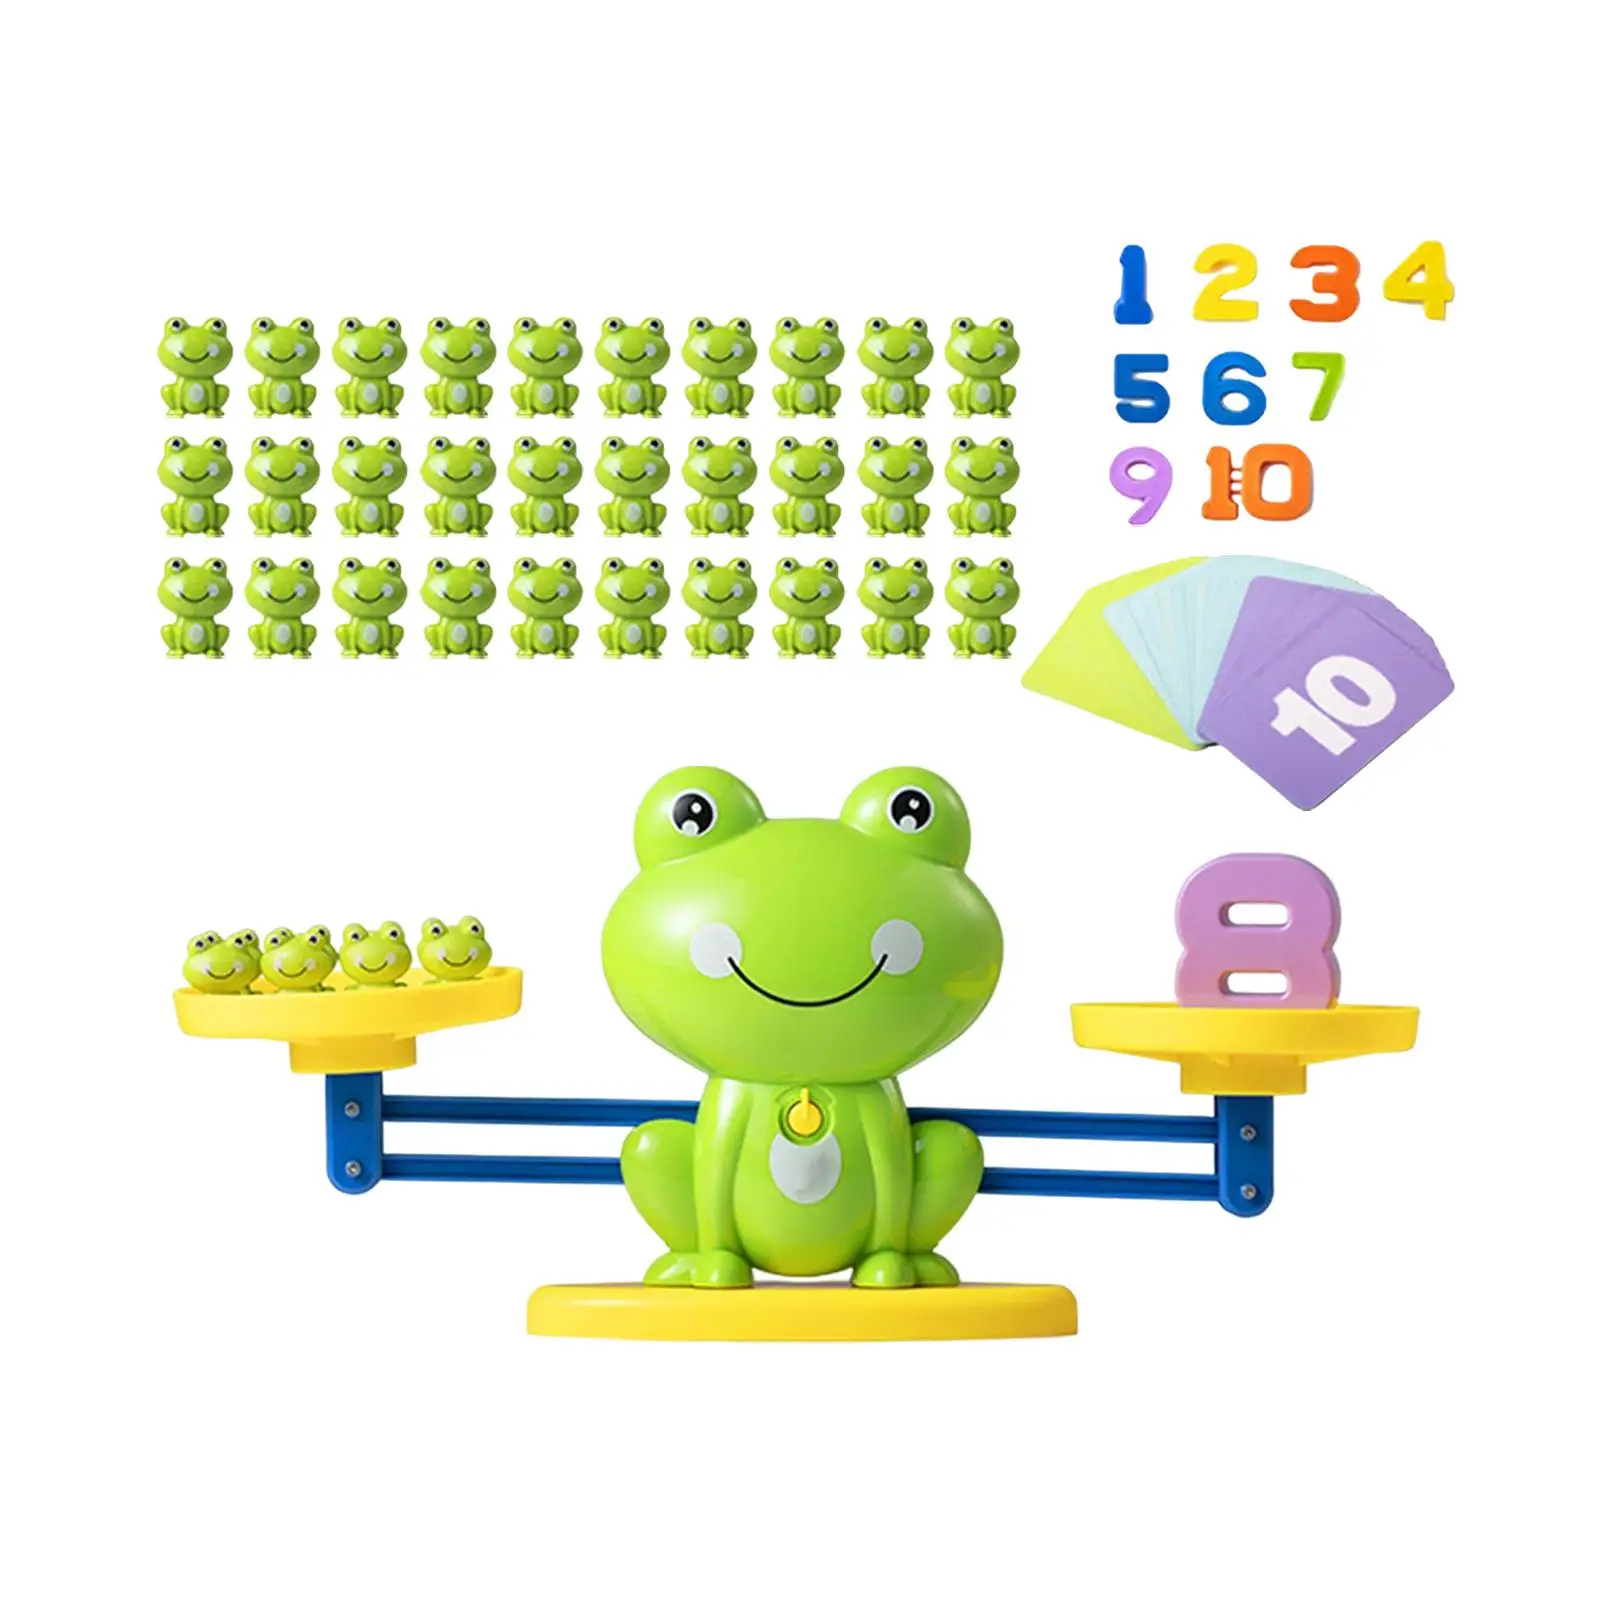 Montessori Balance Math Game Educational for Kids Holiday Gifts